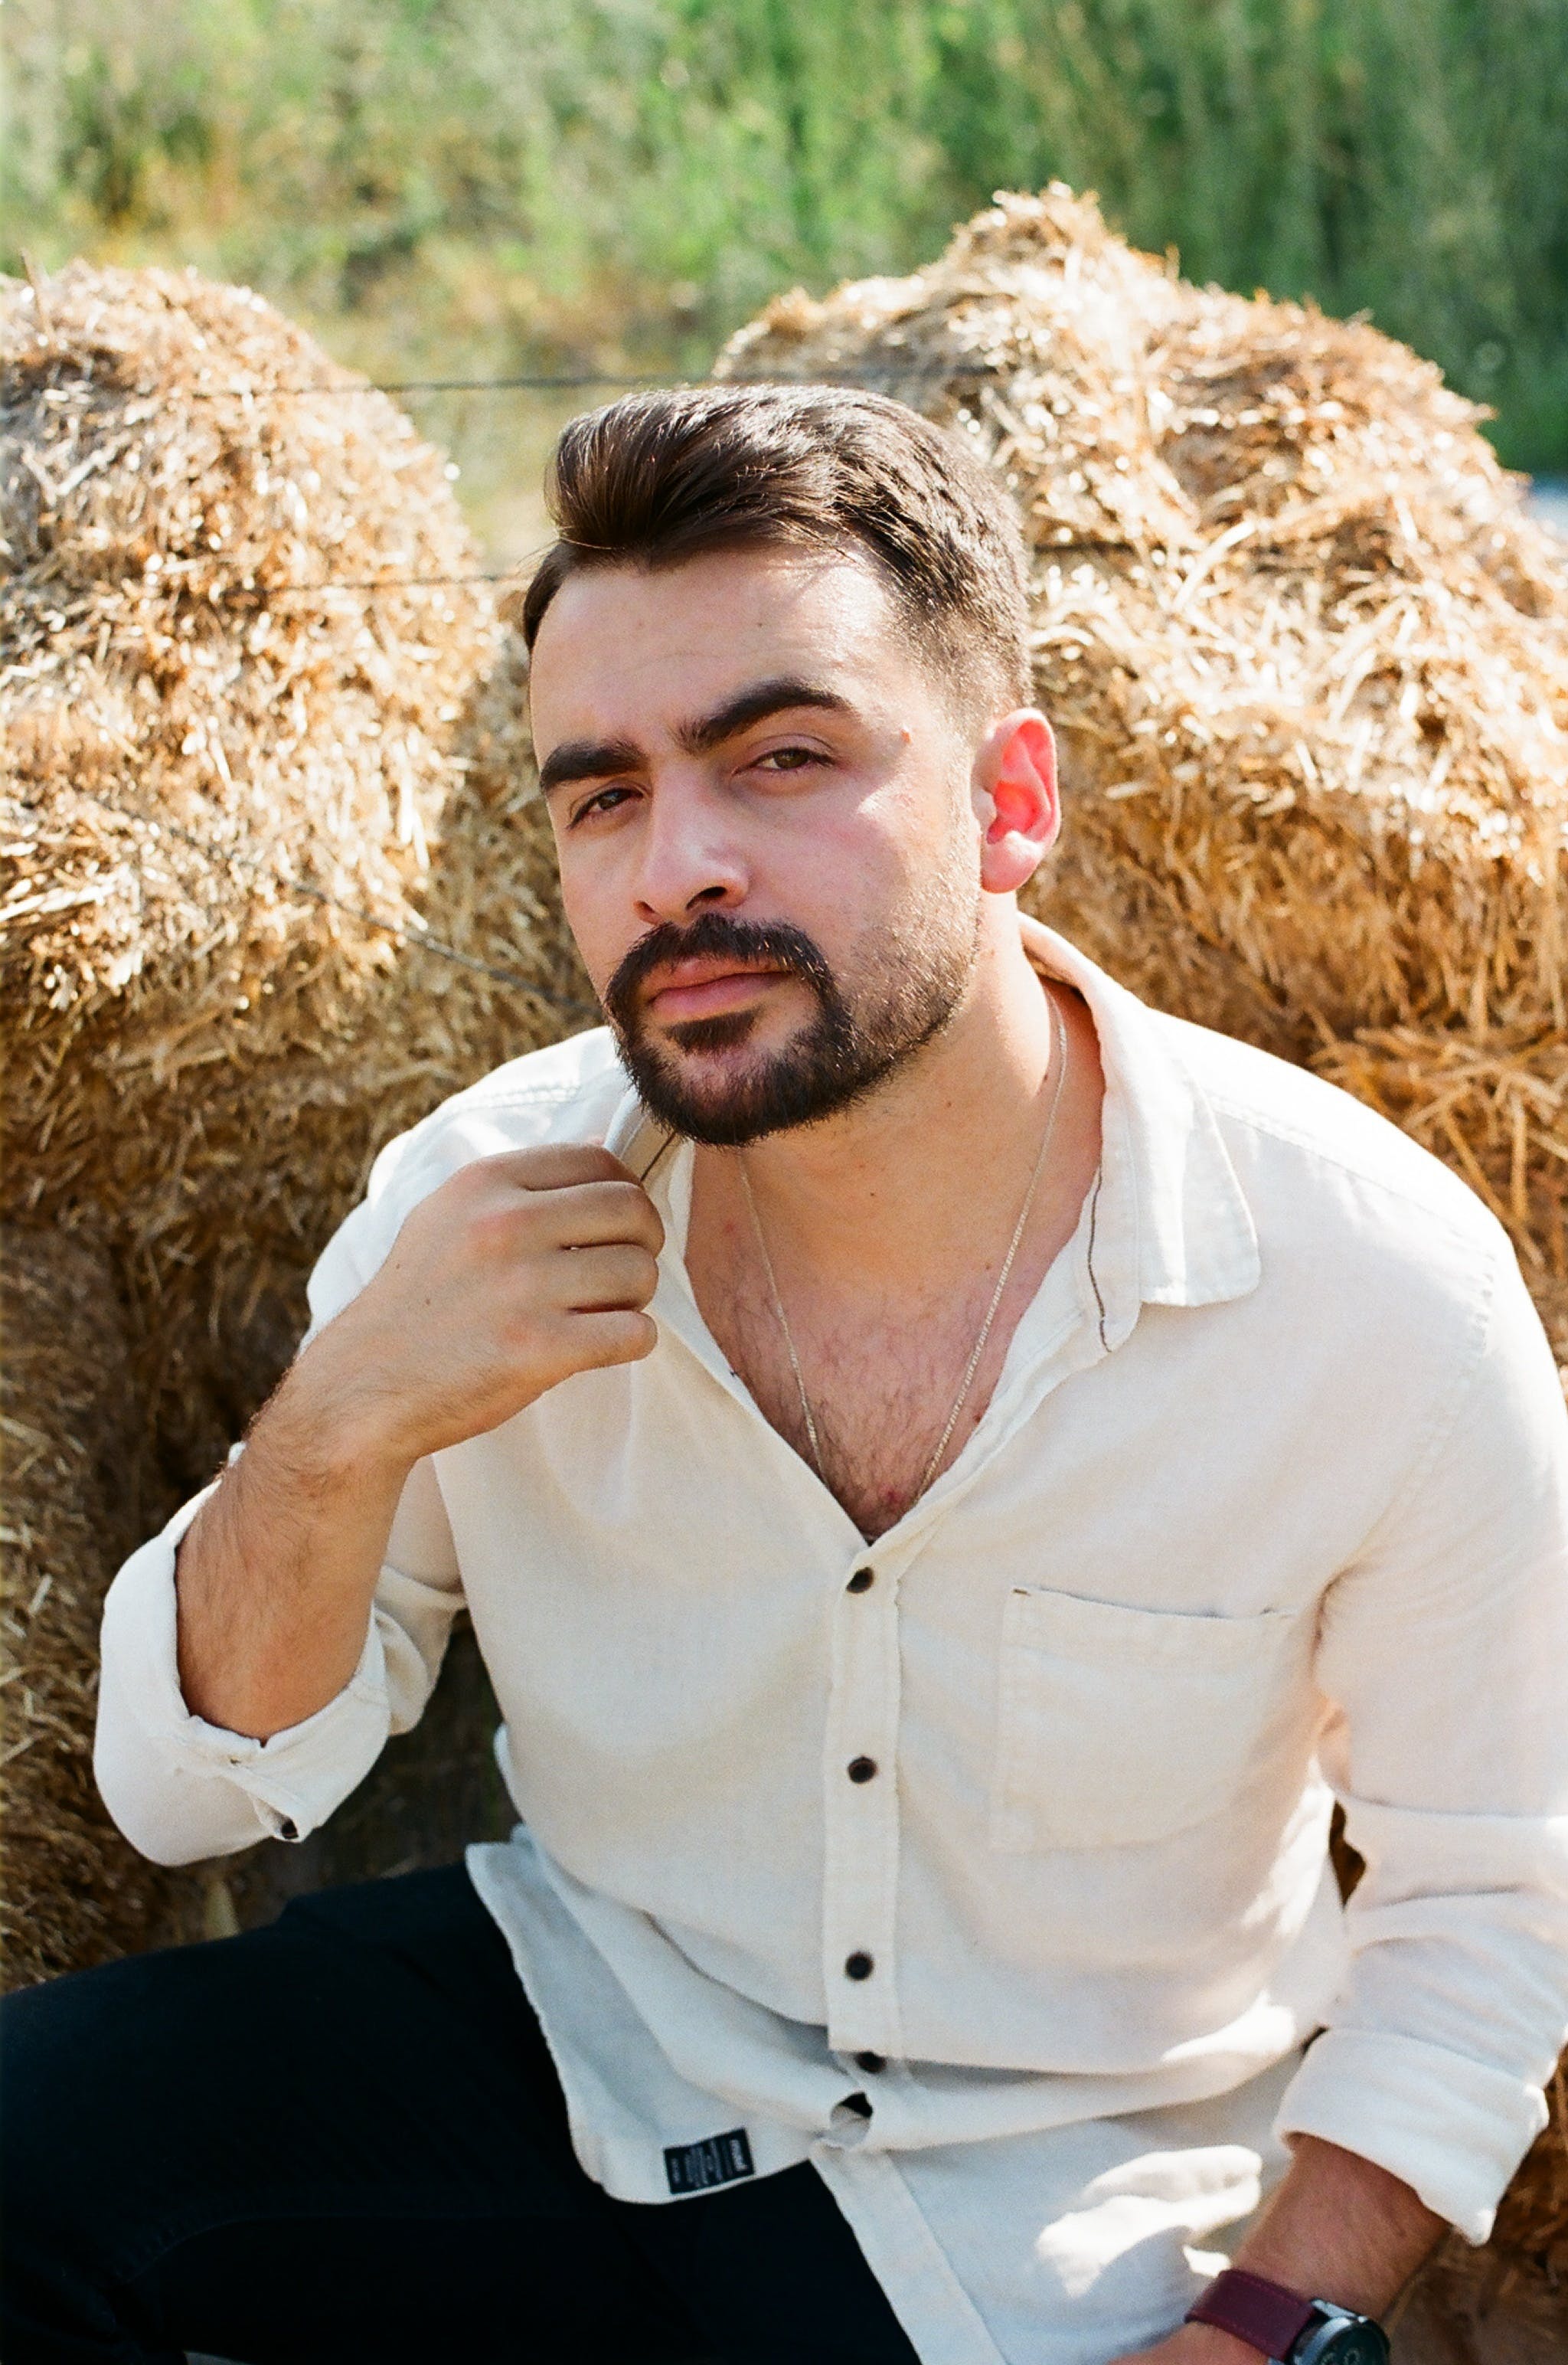 A man sitting by bales of hay | Source: Pexels